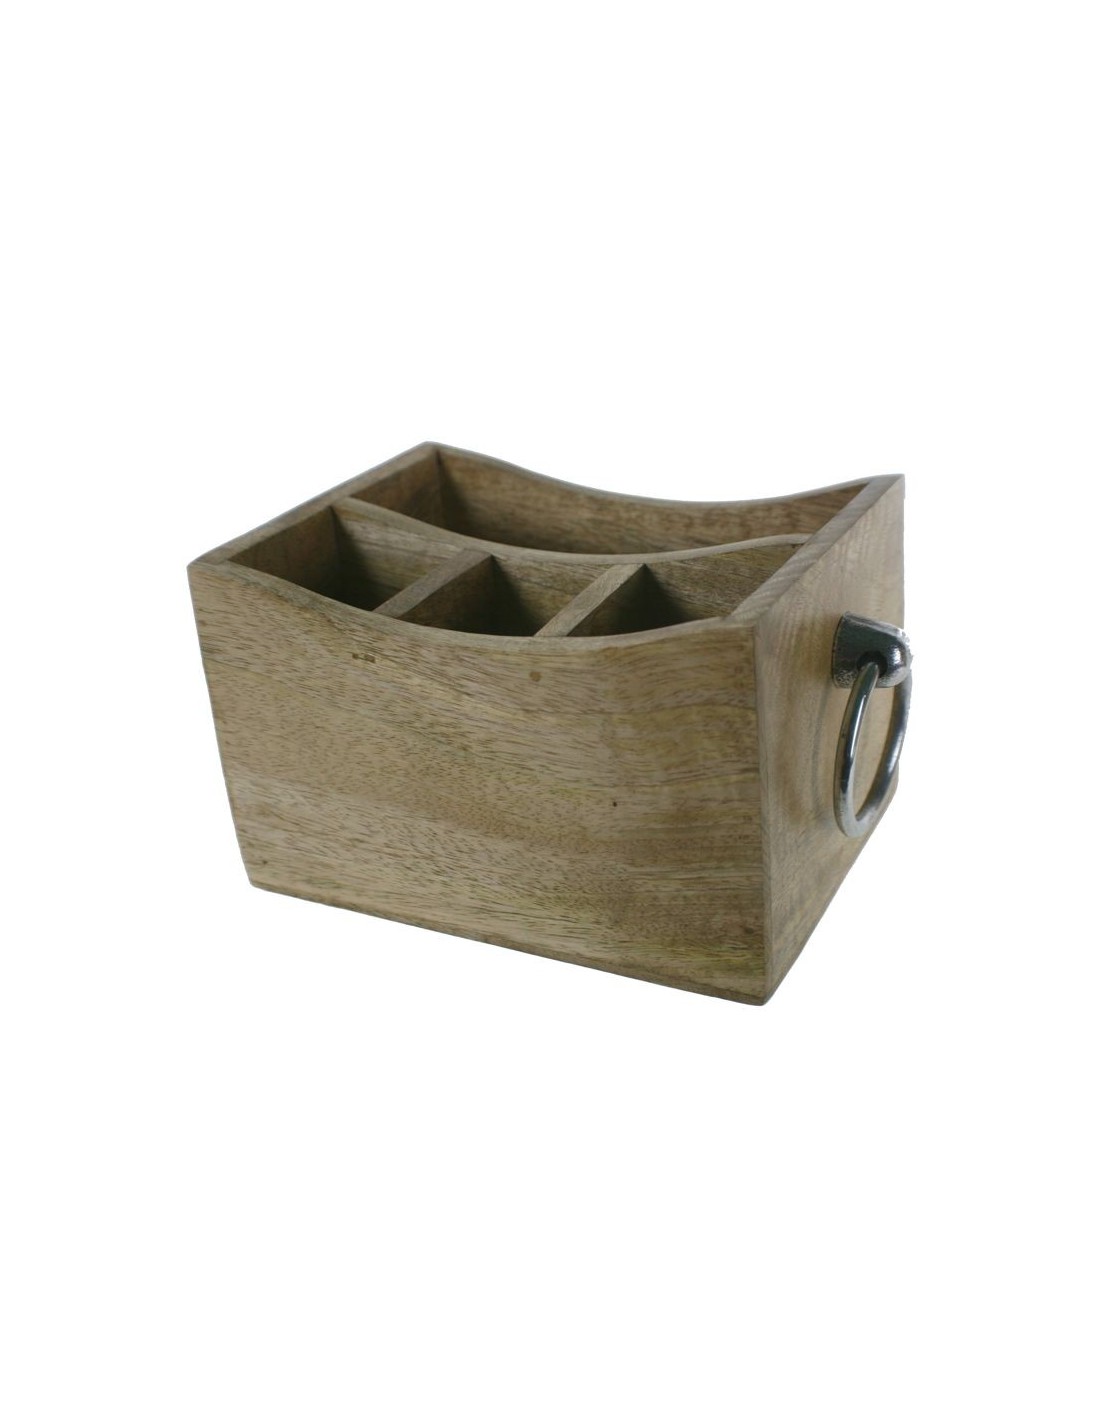 frío Raramente suficiente Caja organizador de madera para multiusos estilo vintage nórdico